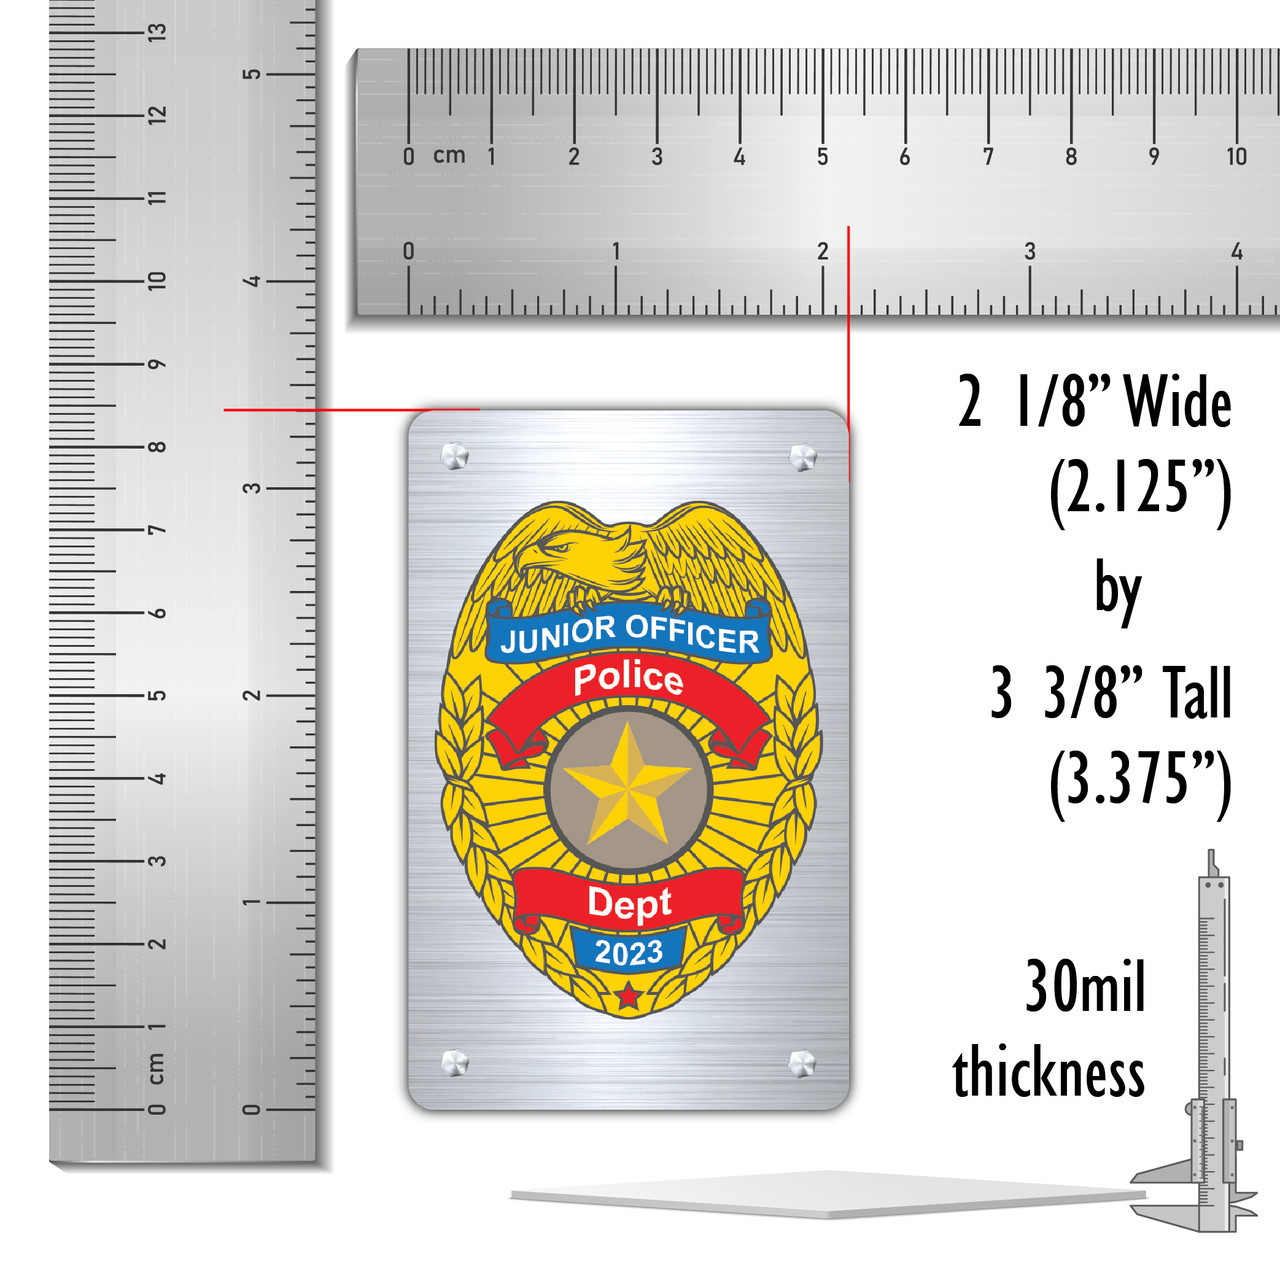 Custom .75 Standard Badge Reel with Slide Clip - WeHa Print